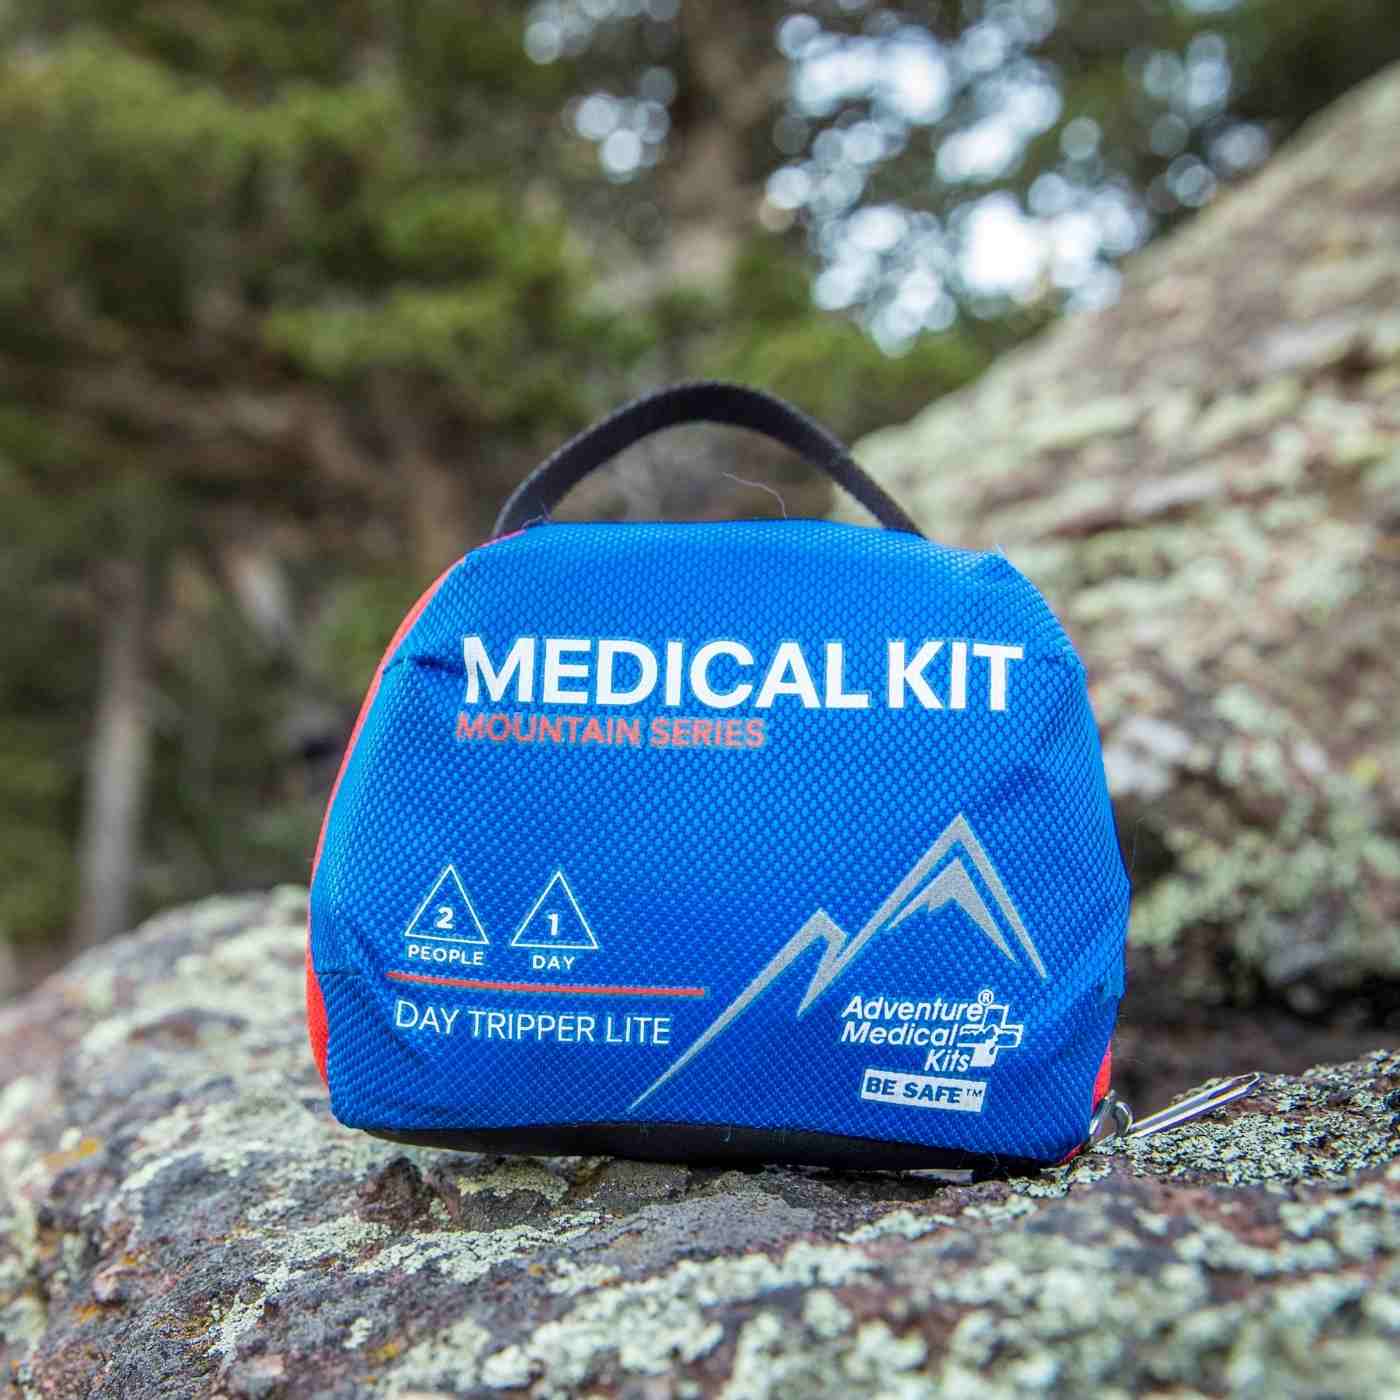 Mountain Series Medical Kit - Day Tripper Lite kit on rock